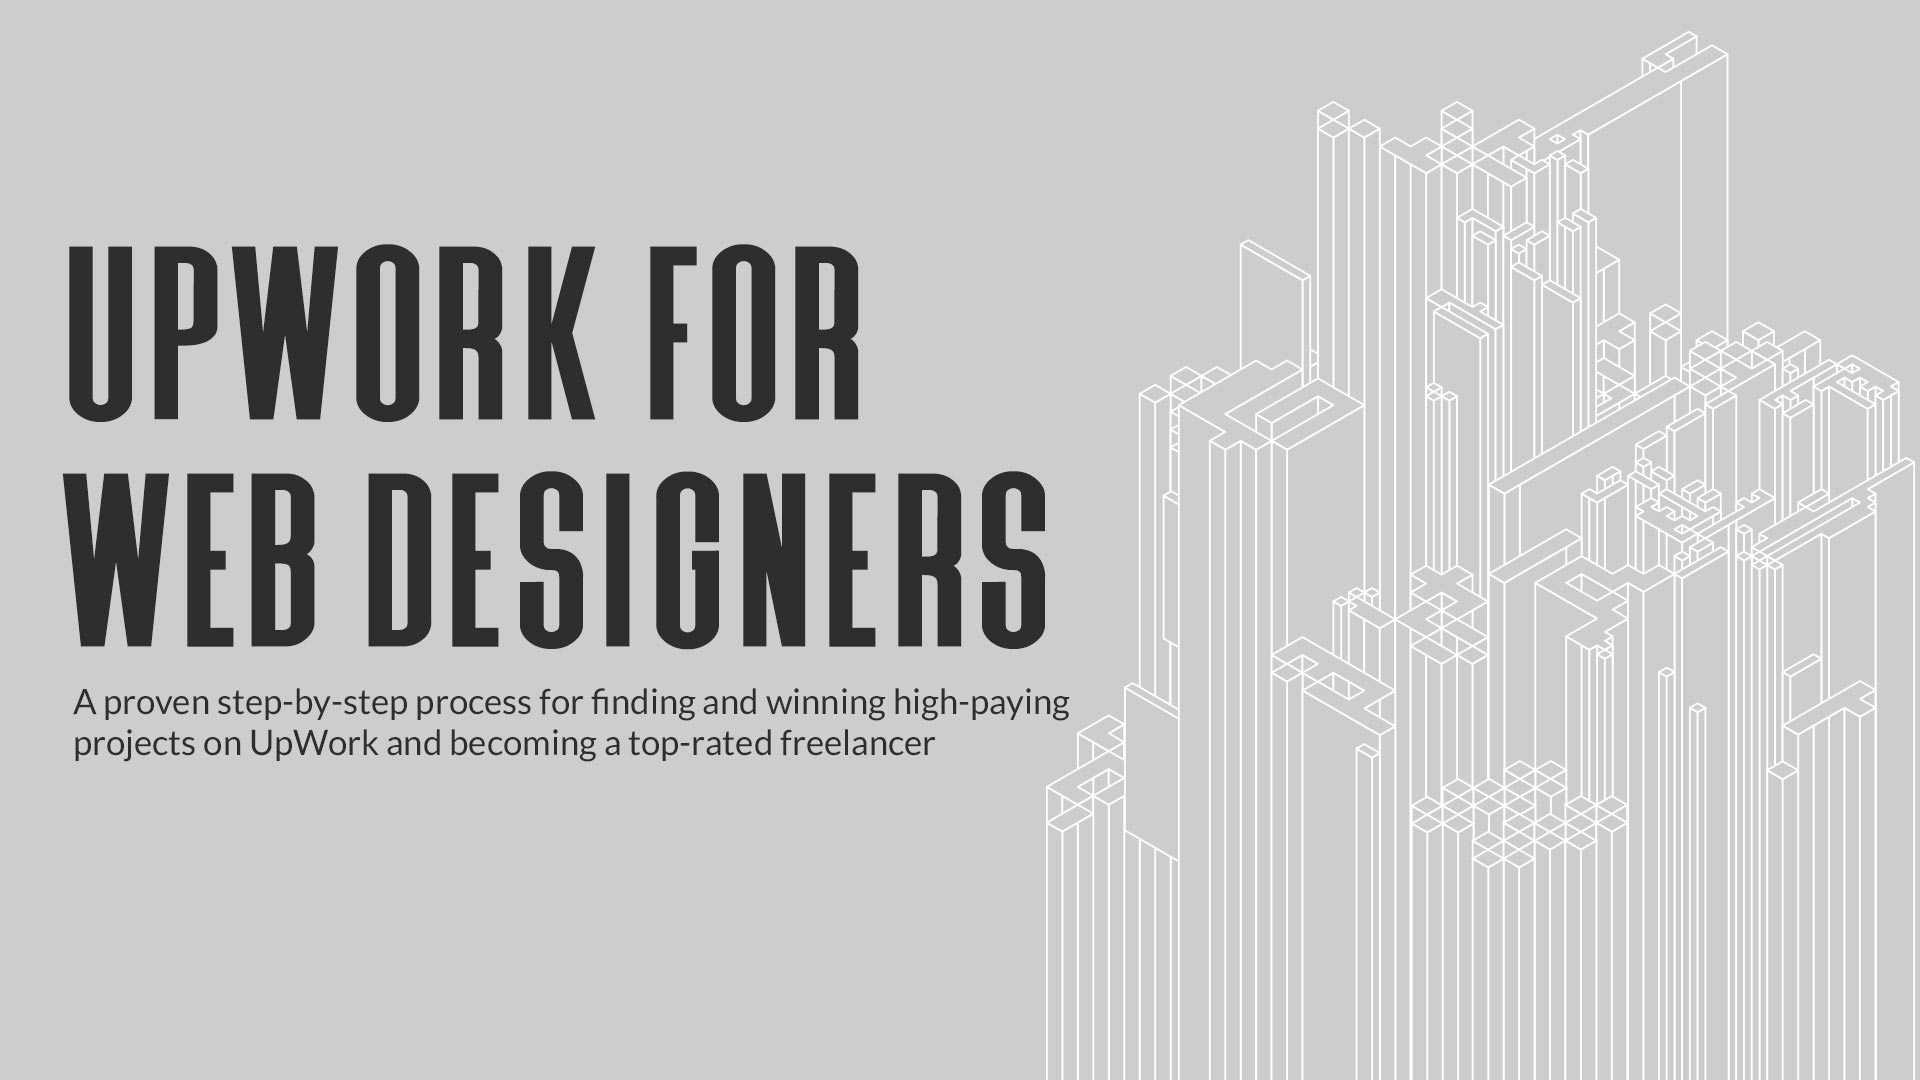 Upwork for Web Designers title image